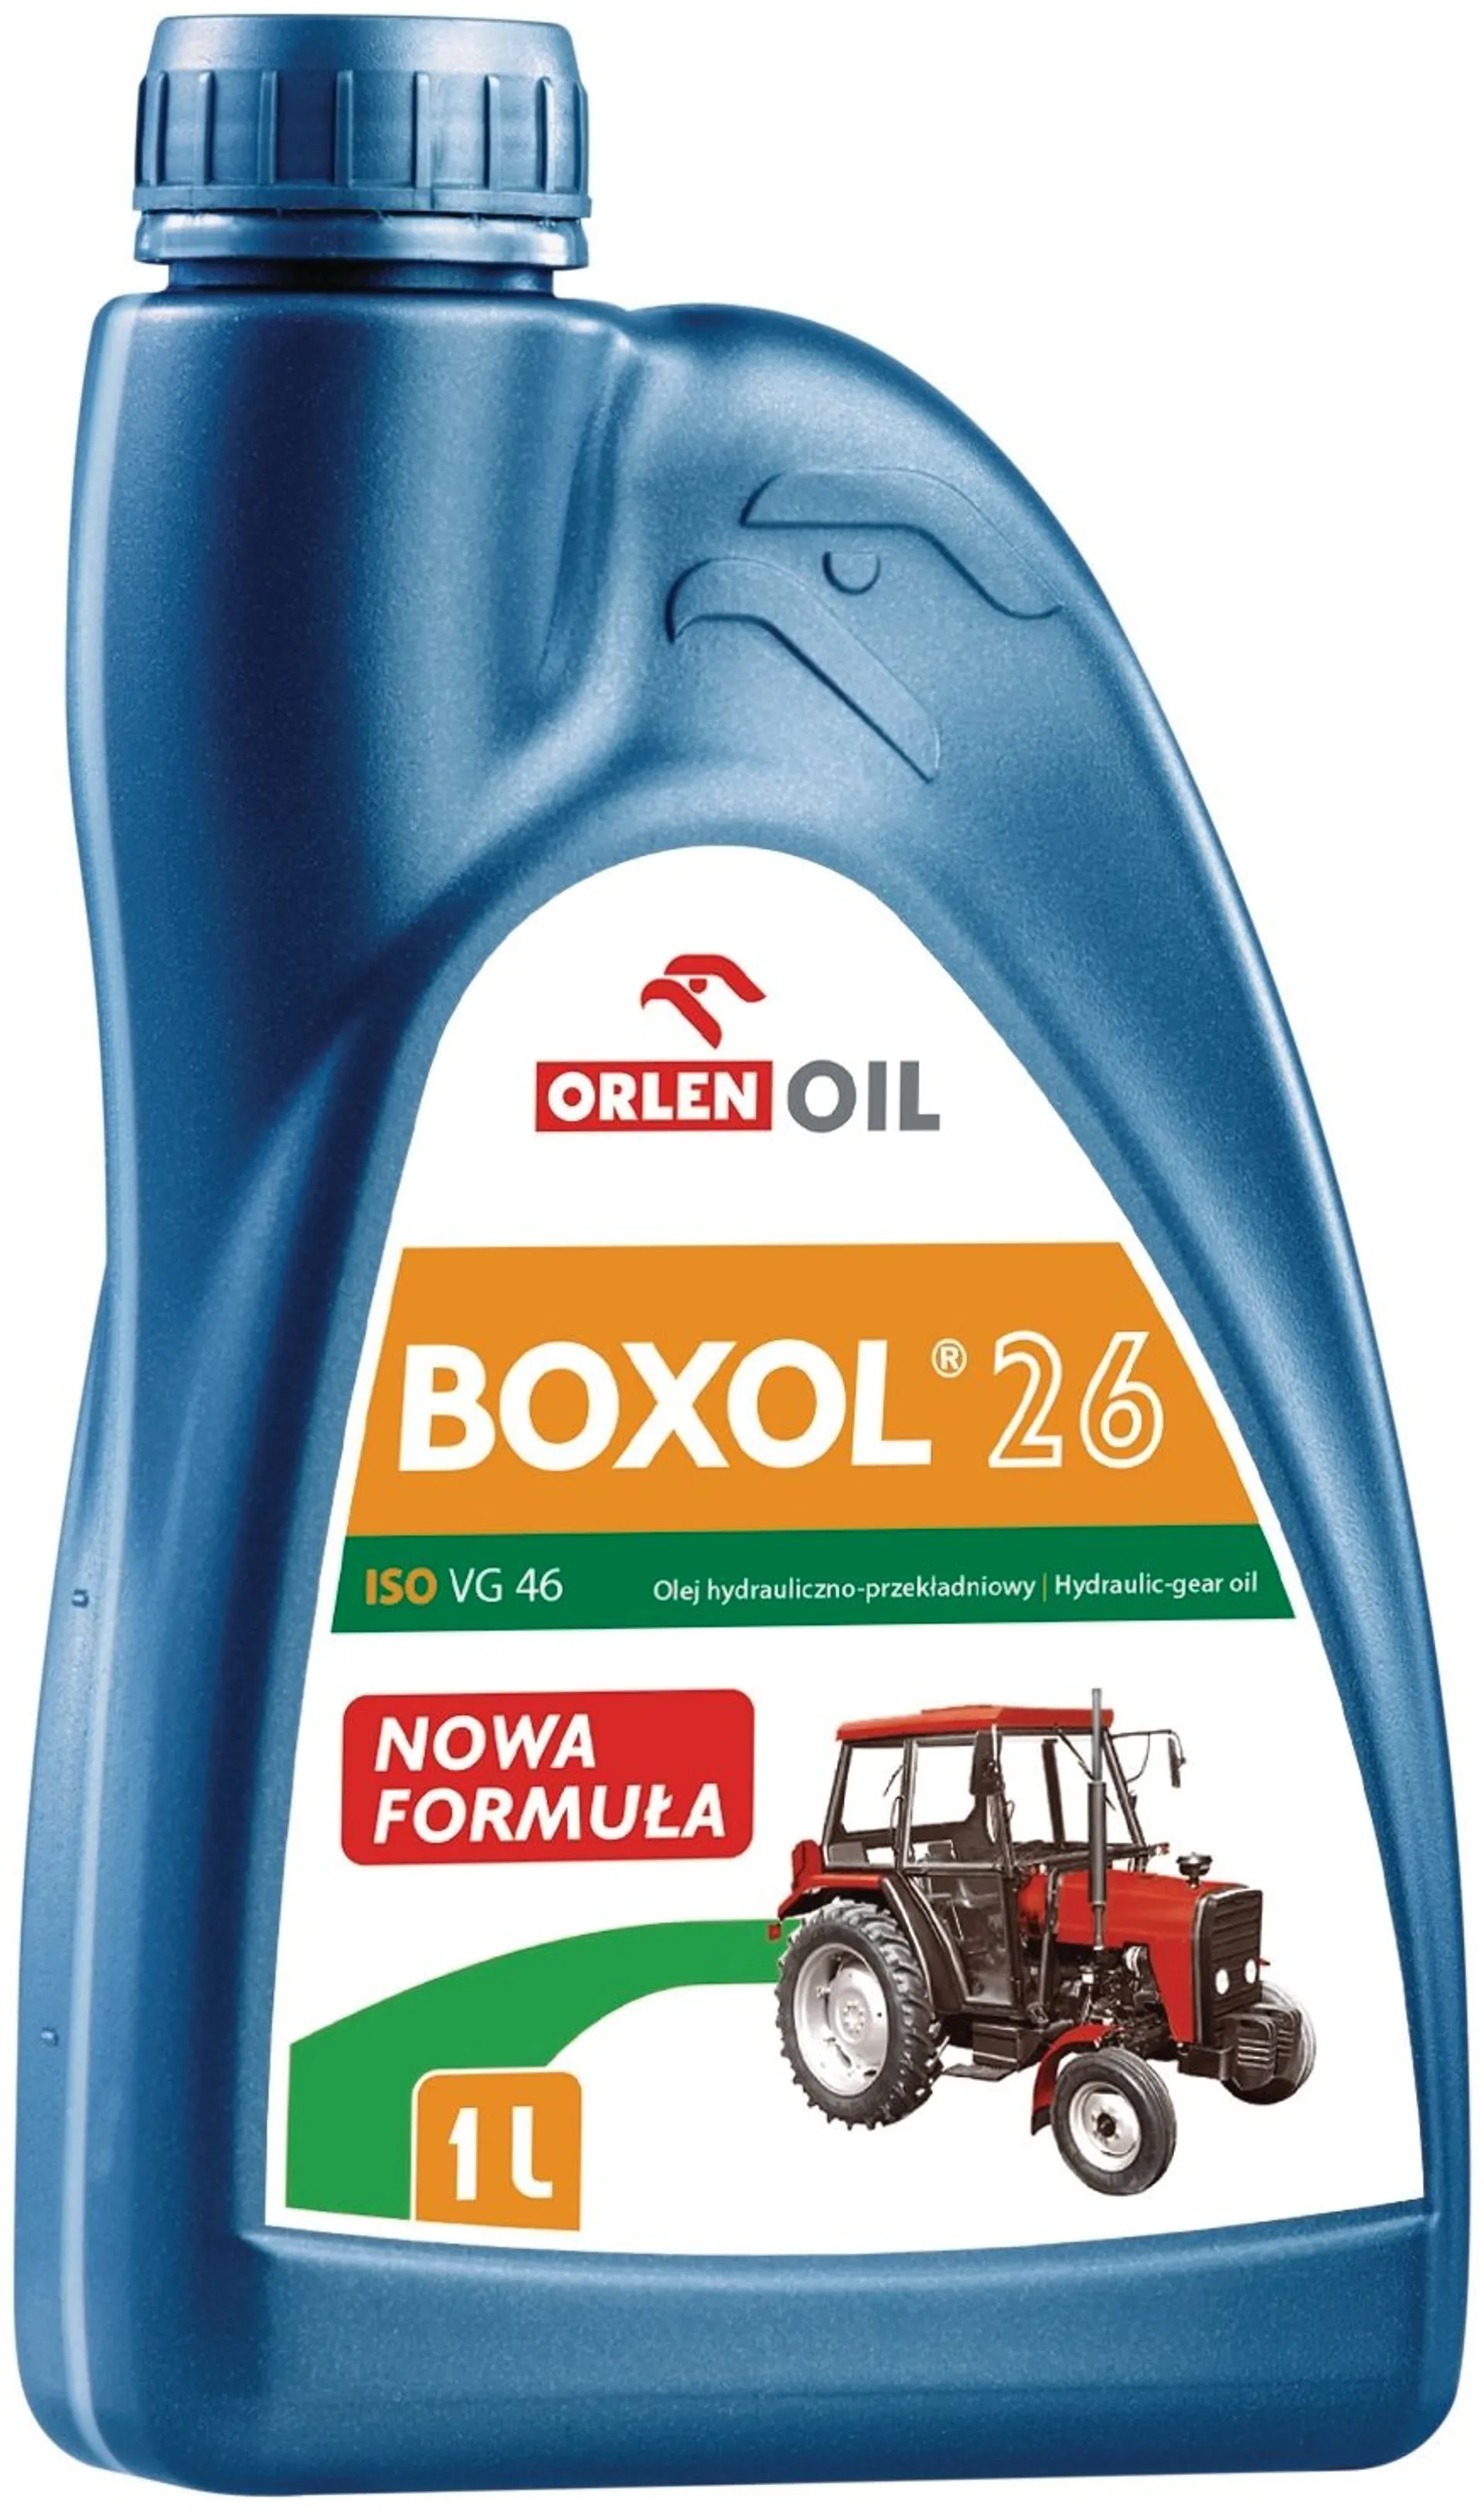 Orlen Oil 1l Boxol 26 hydrauliikkaöljy